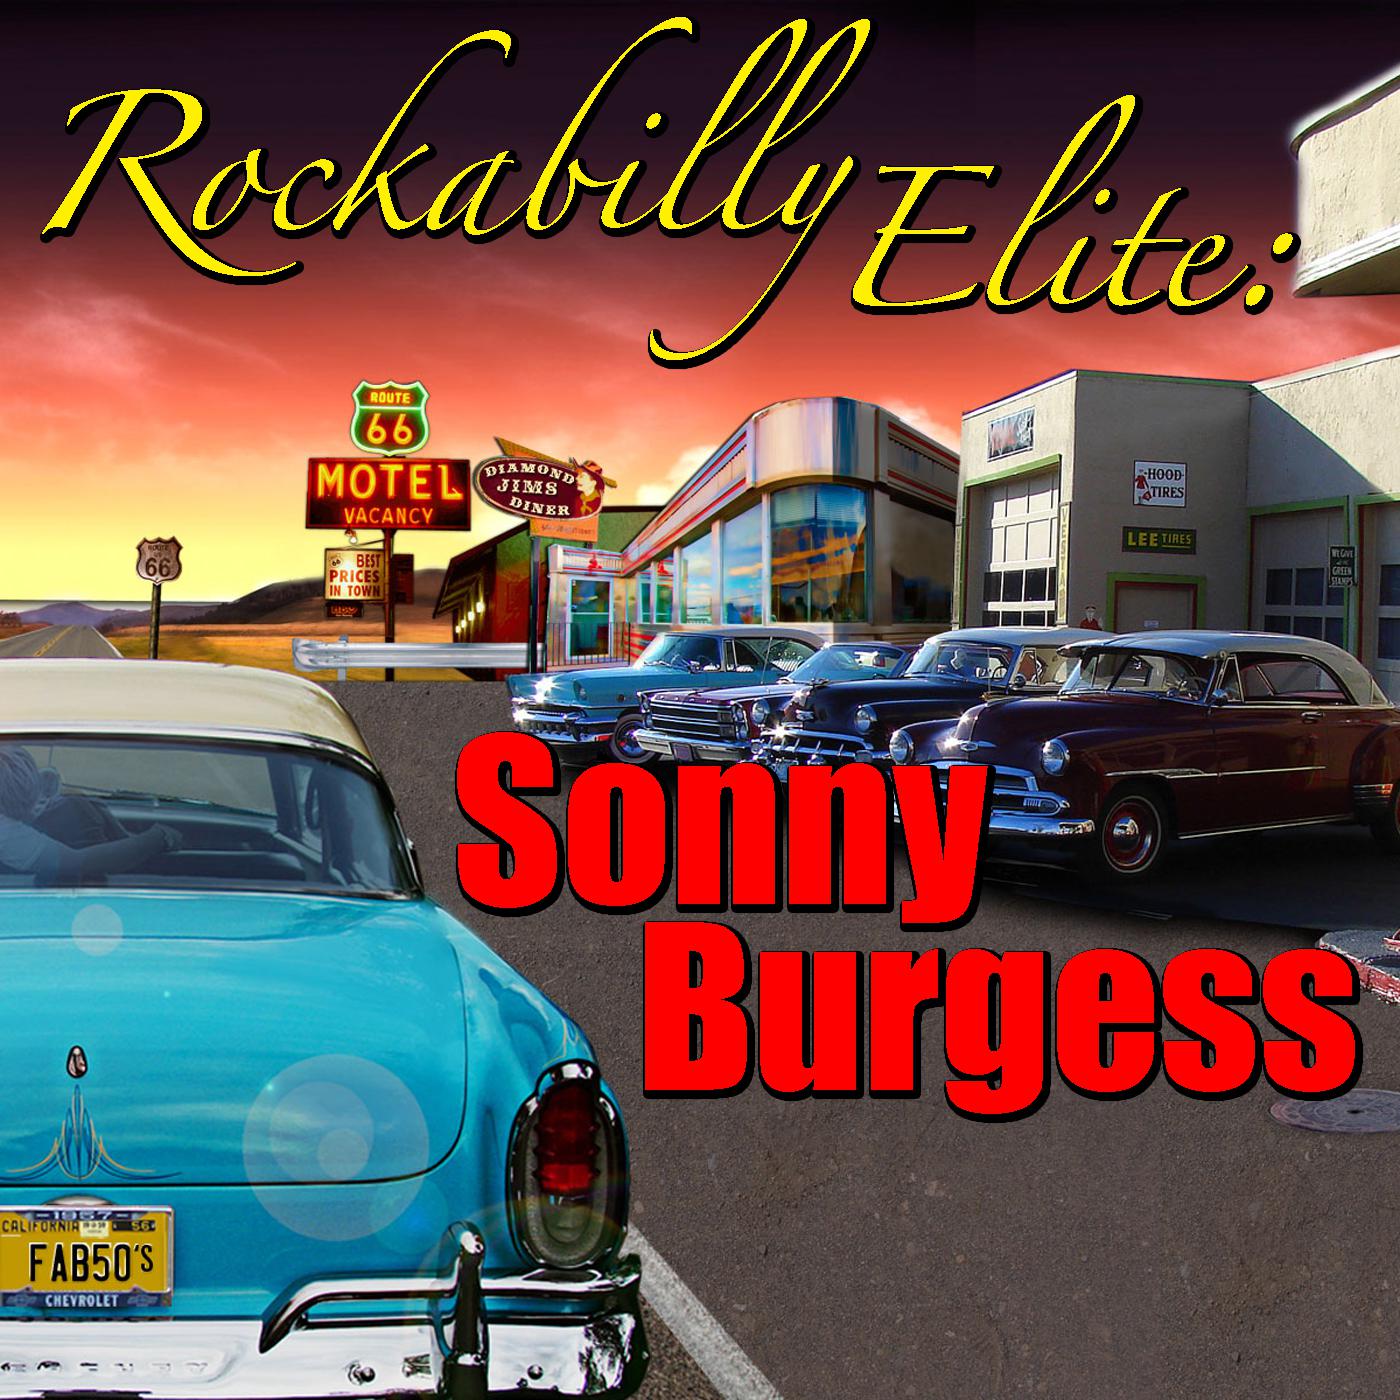 Rockabilly Elite: Sonny Burgess